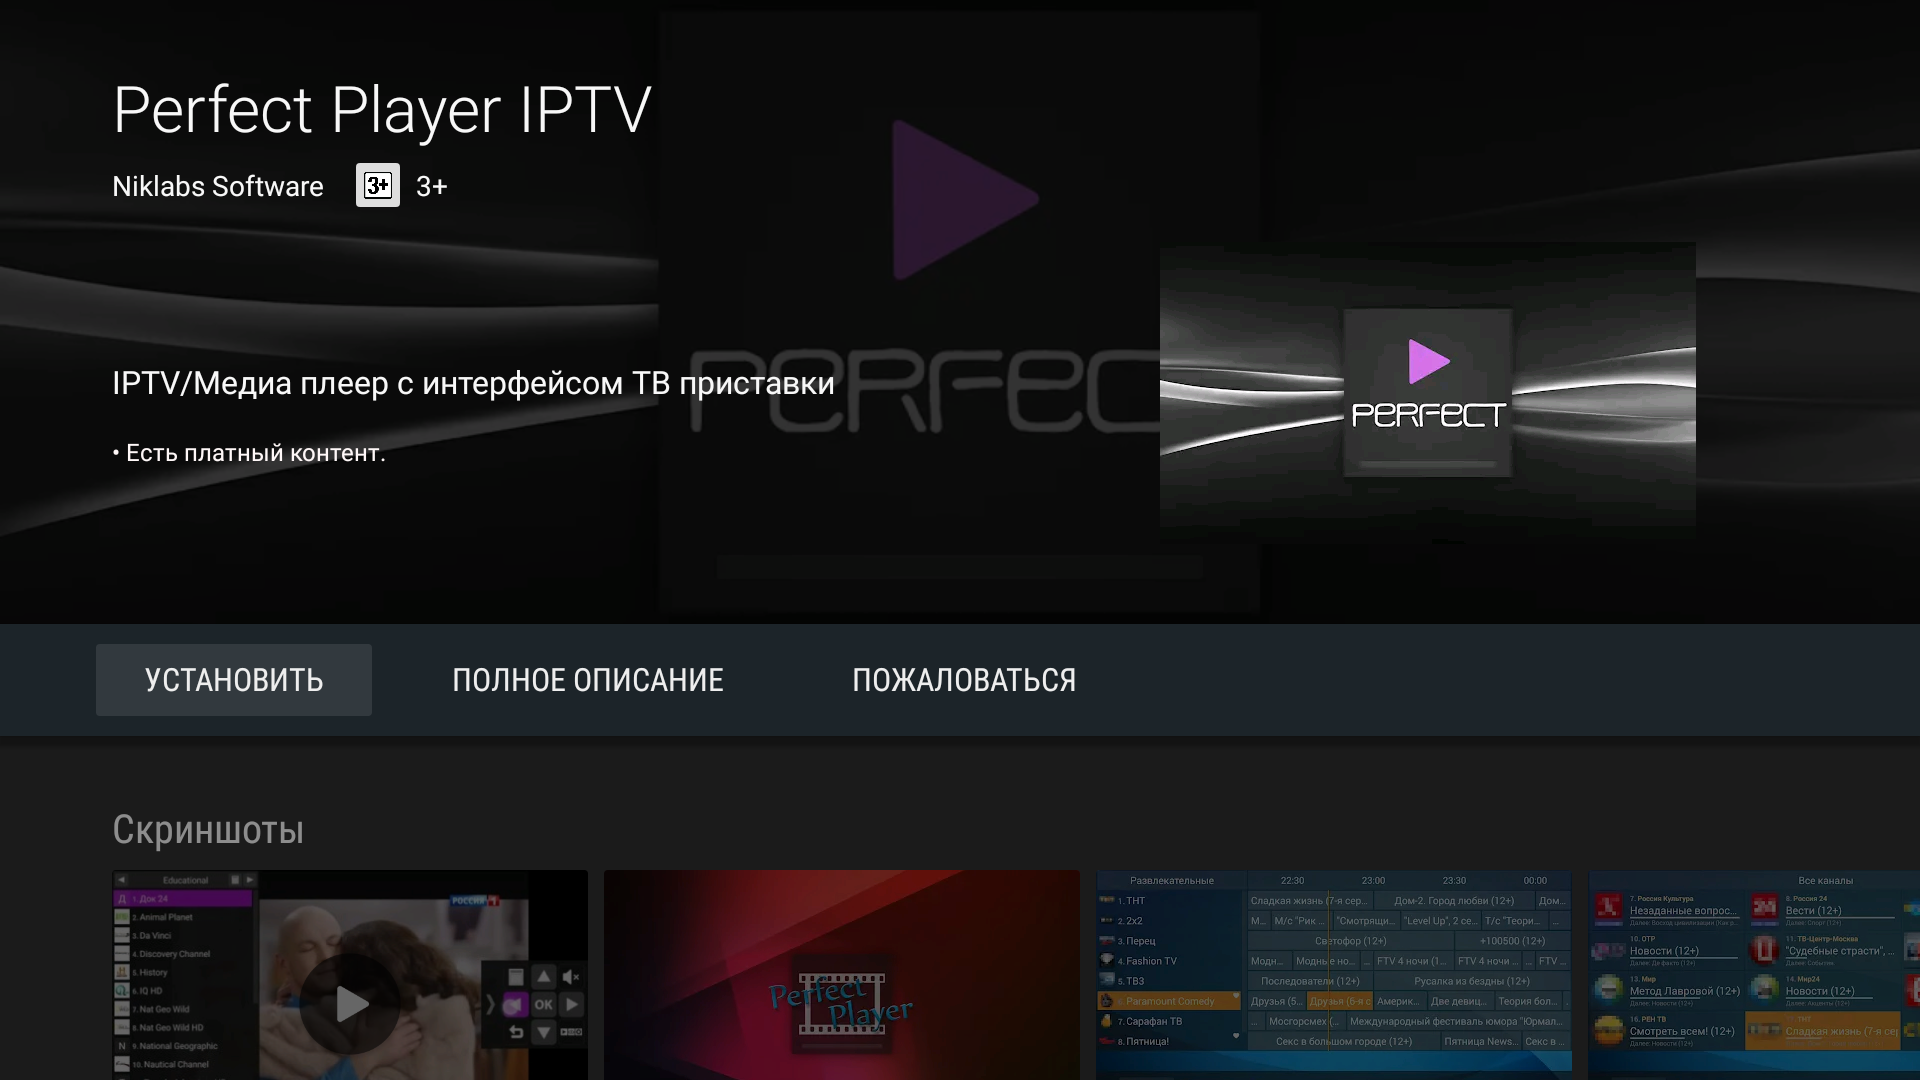 Perfect Player - скачать бесплатно Perfect Player 1.1.4